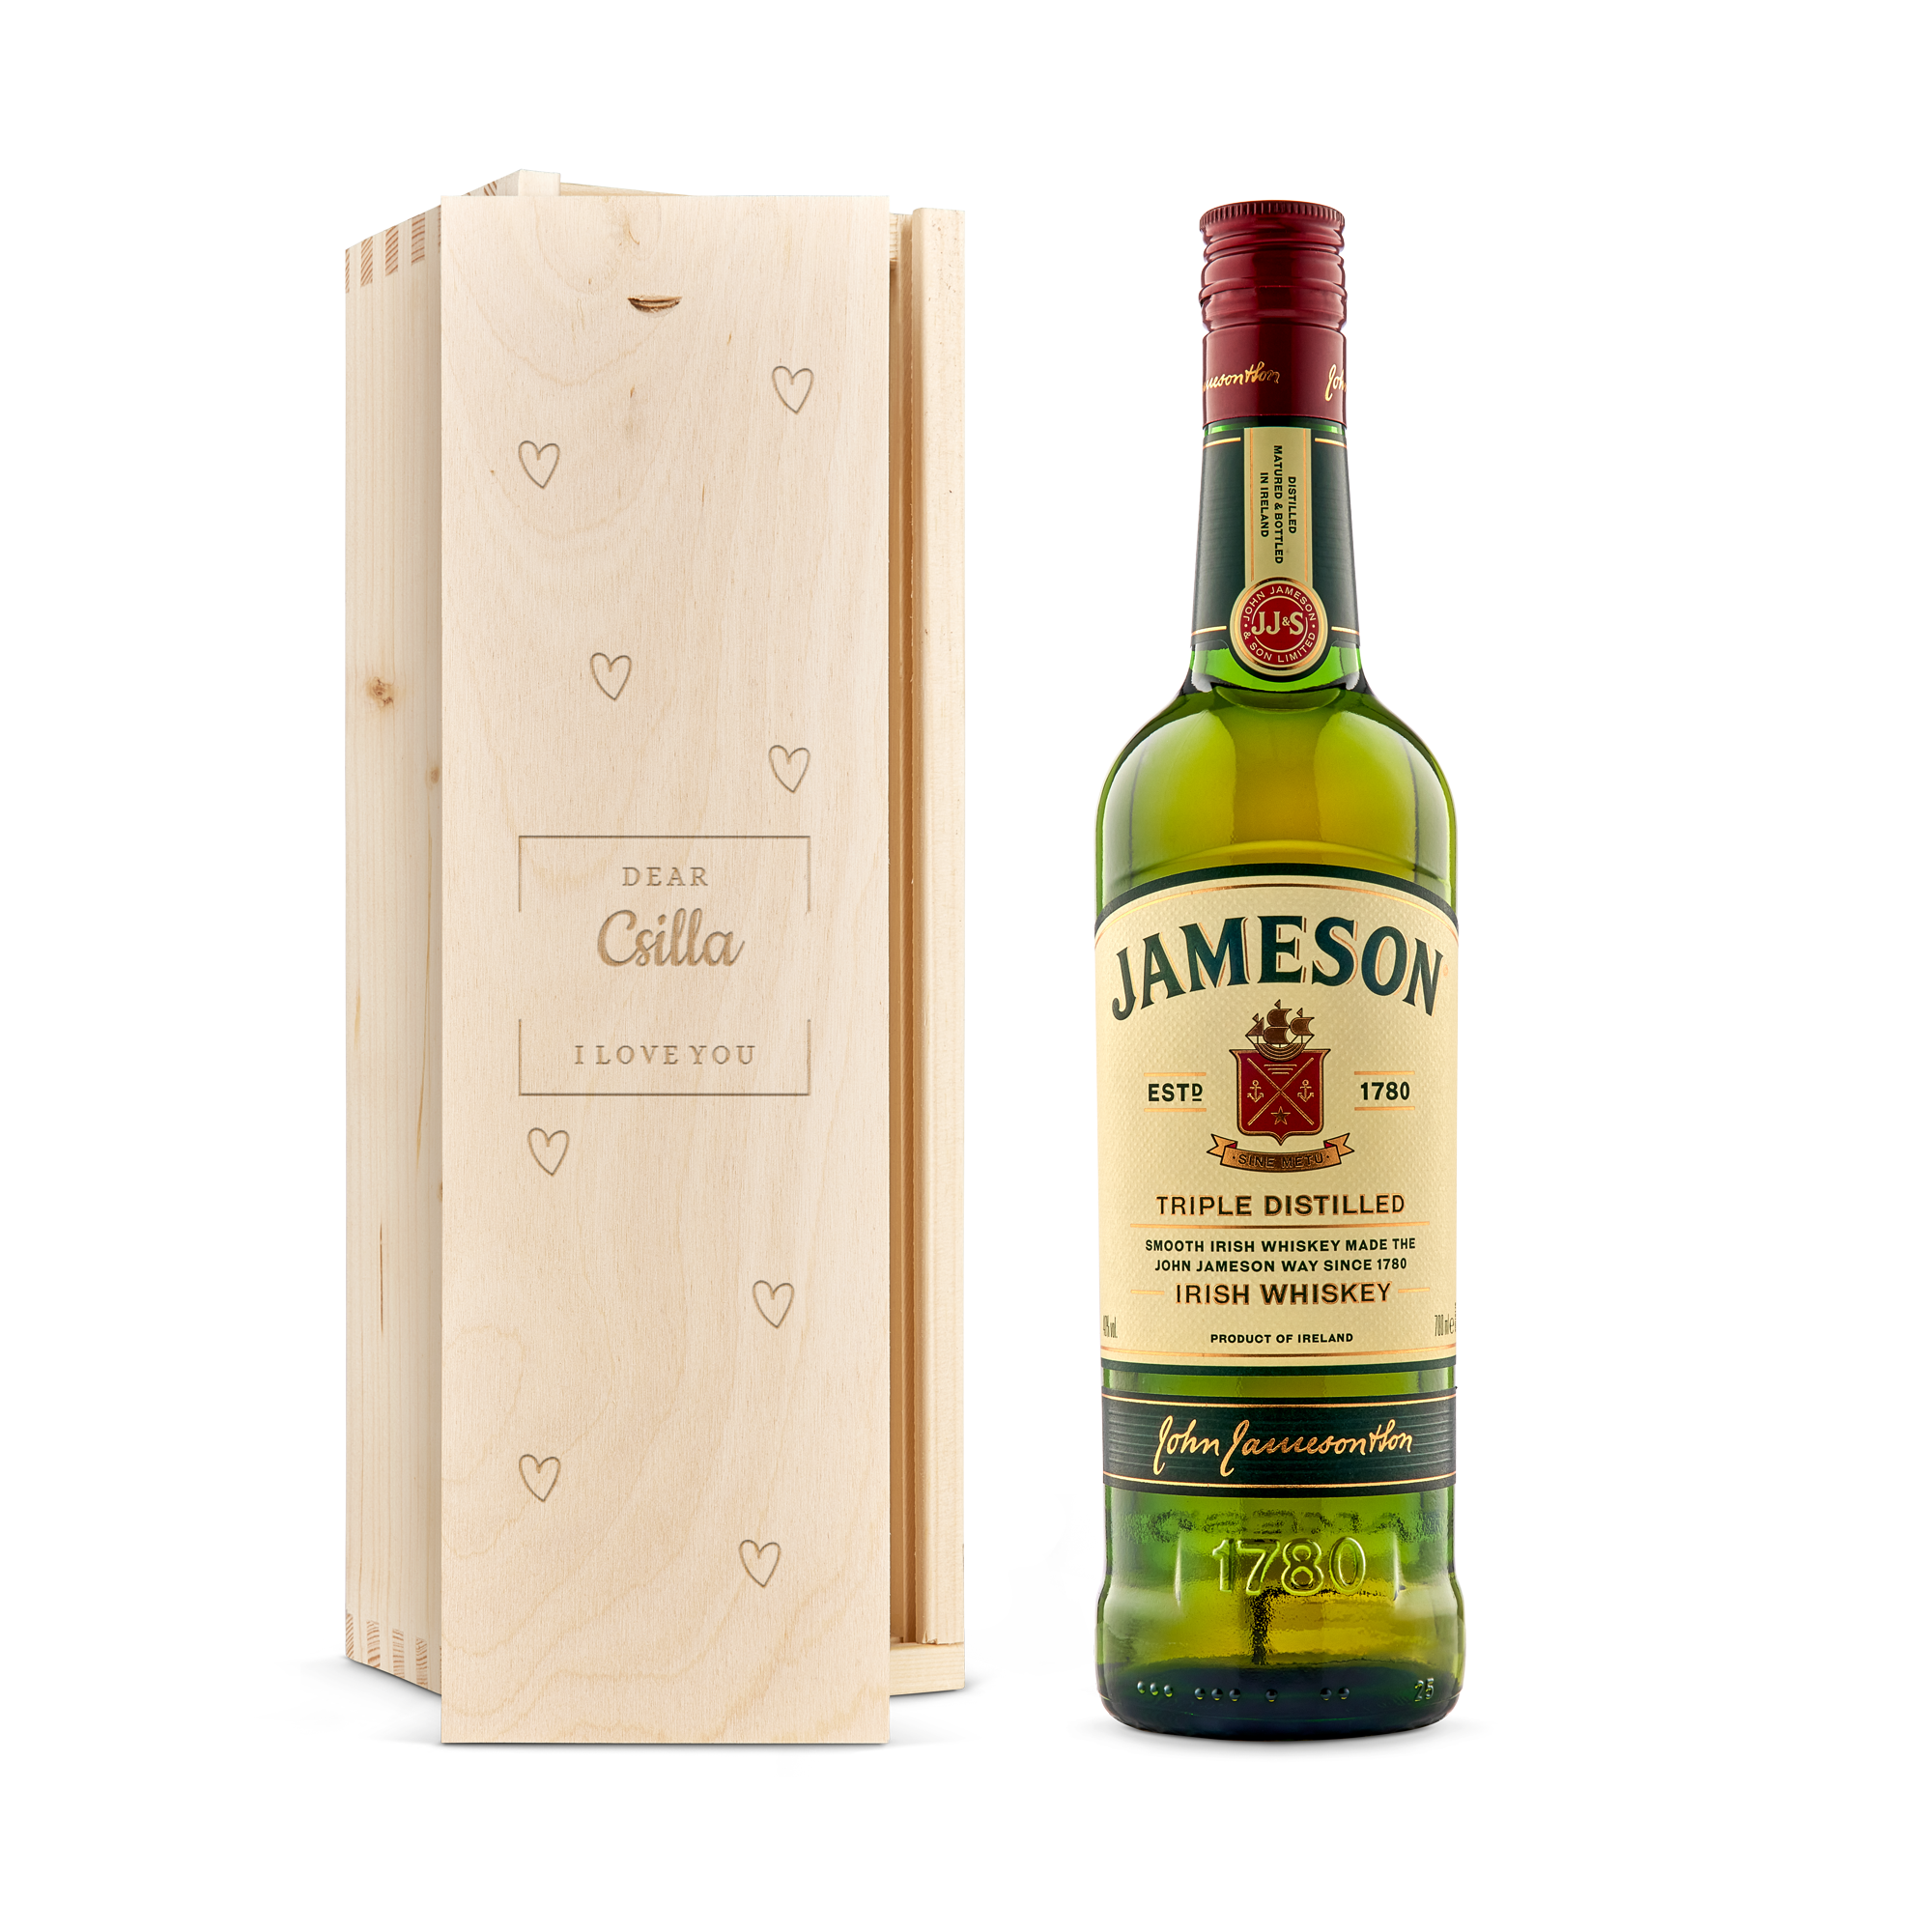 Jameson whisky